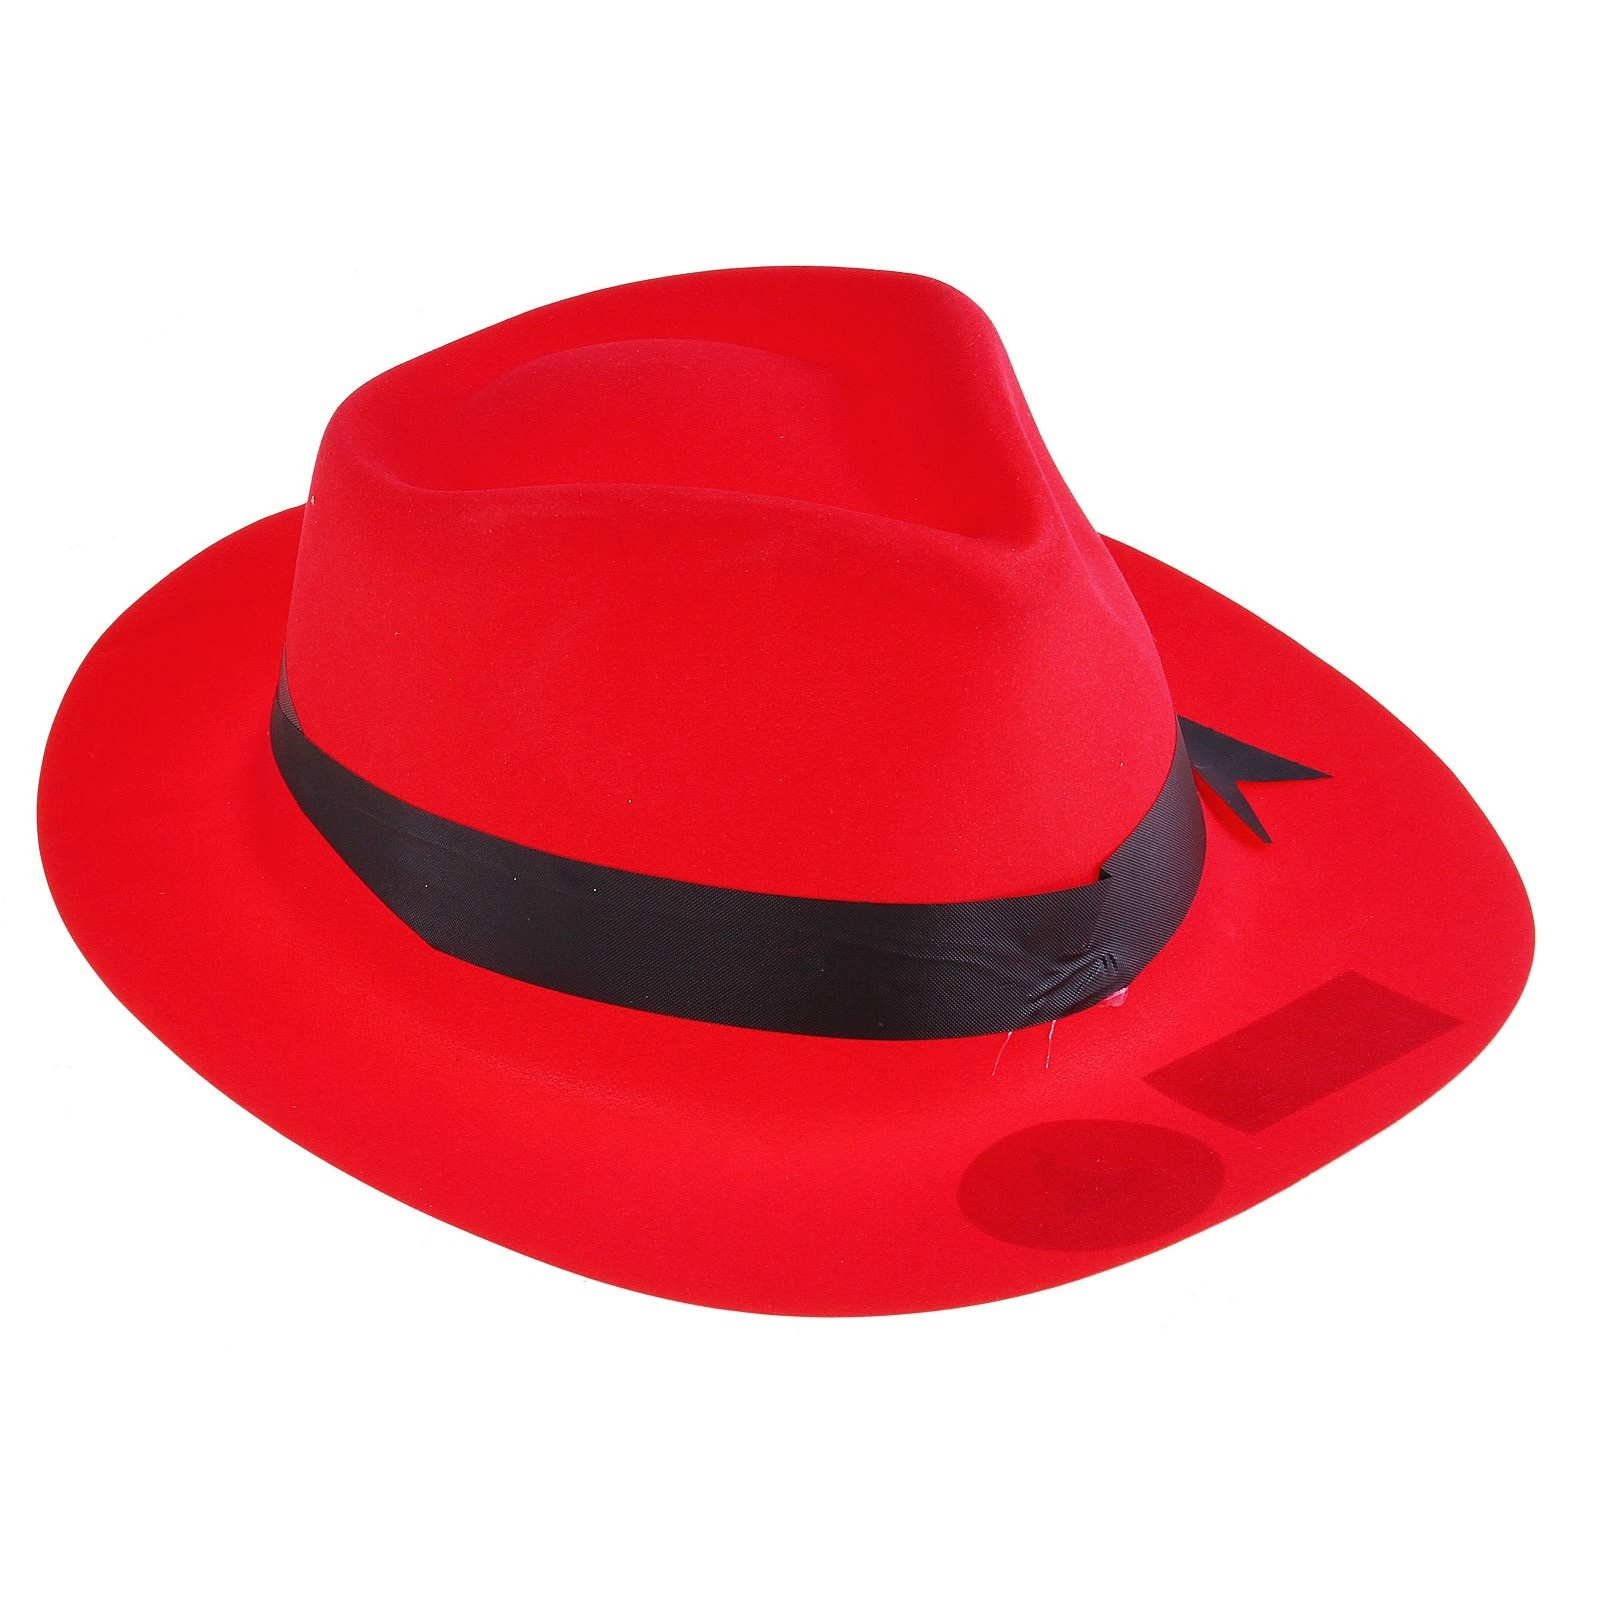 Шляпа 325745 с кантом р.56 цвет: красная - Заинск 